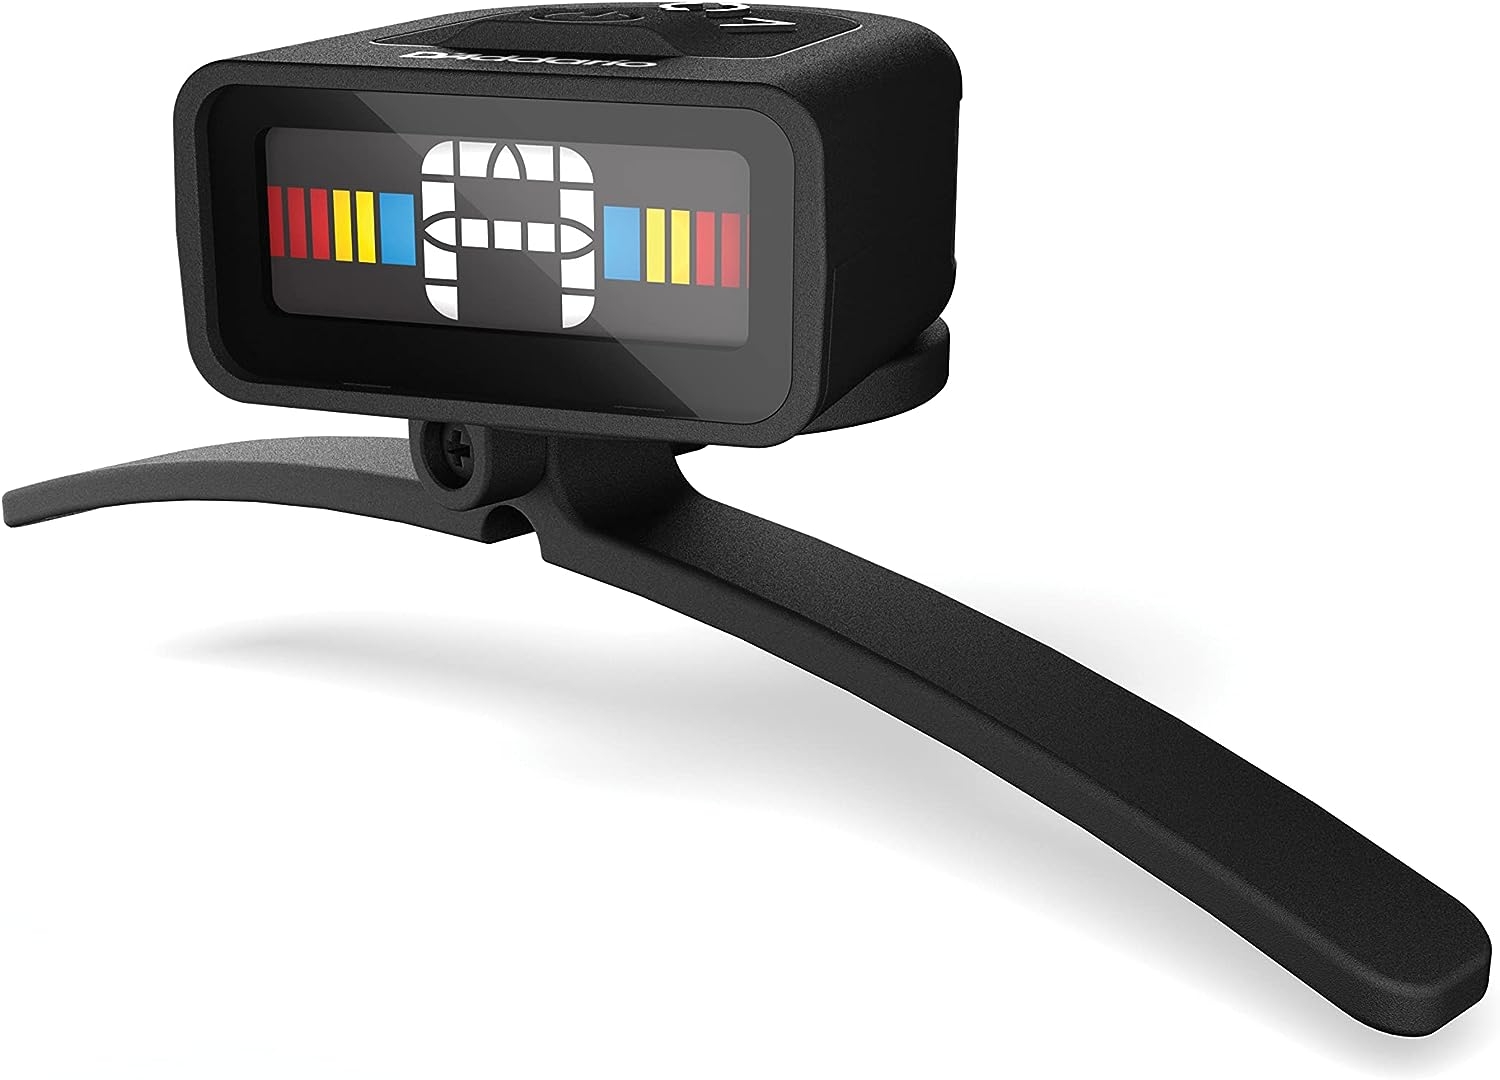 D’Addario Accessories Micro Banjo Tuner – Multi-color display – Digital Tuner – Non Marring Hoop Bracket – Fast & Accurate